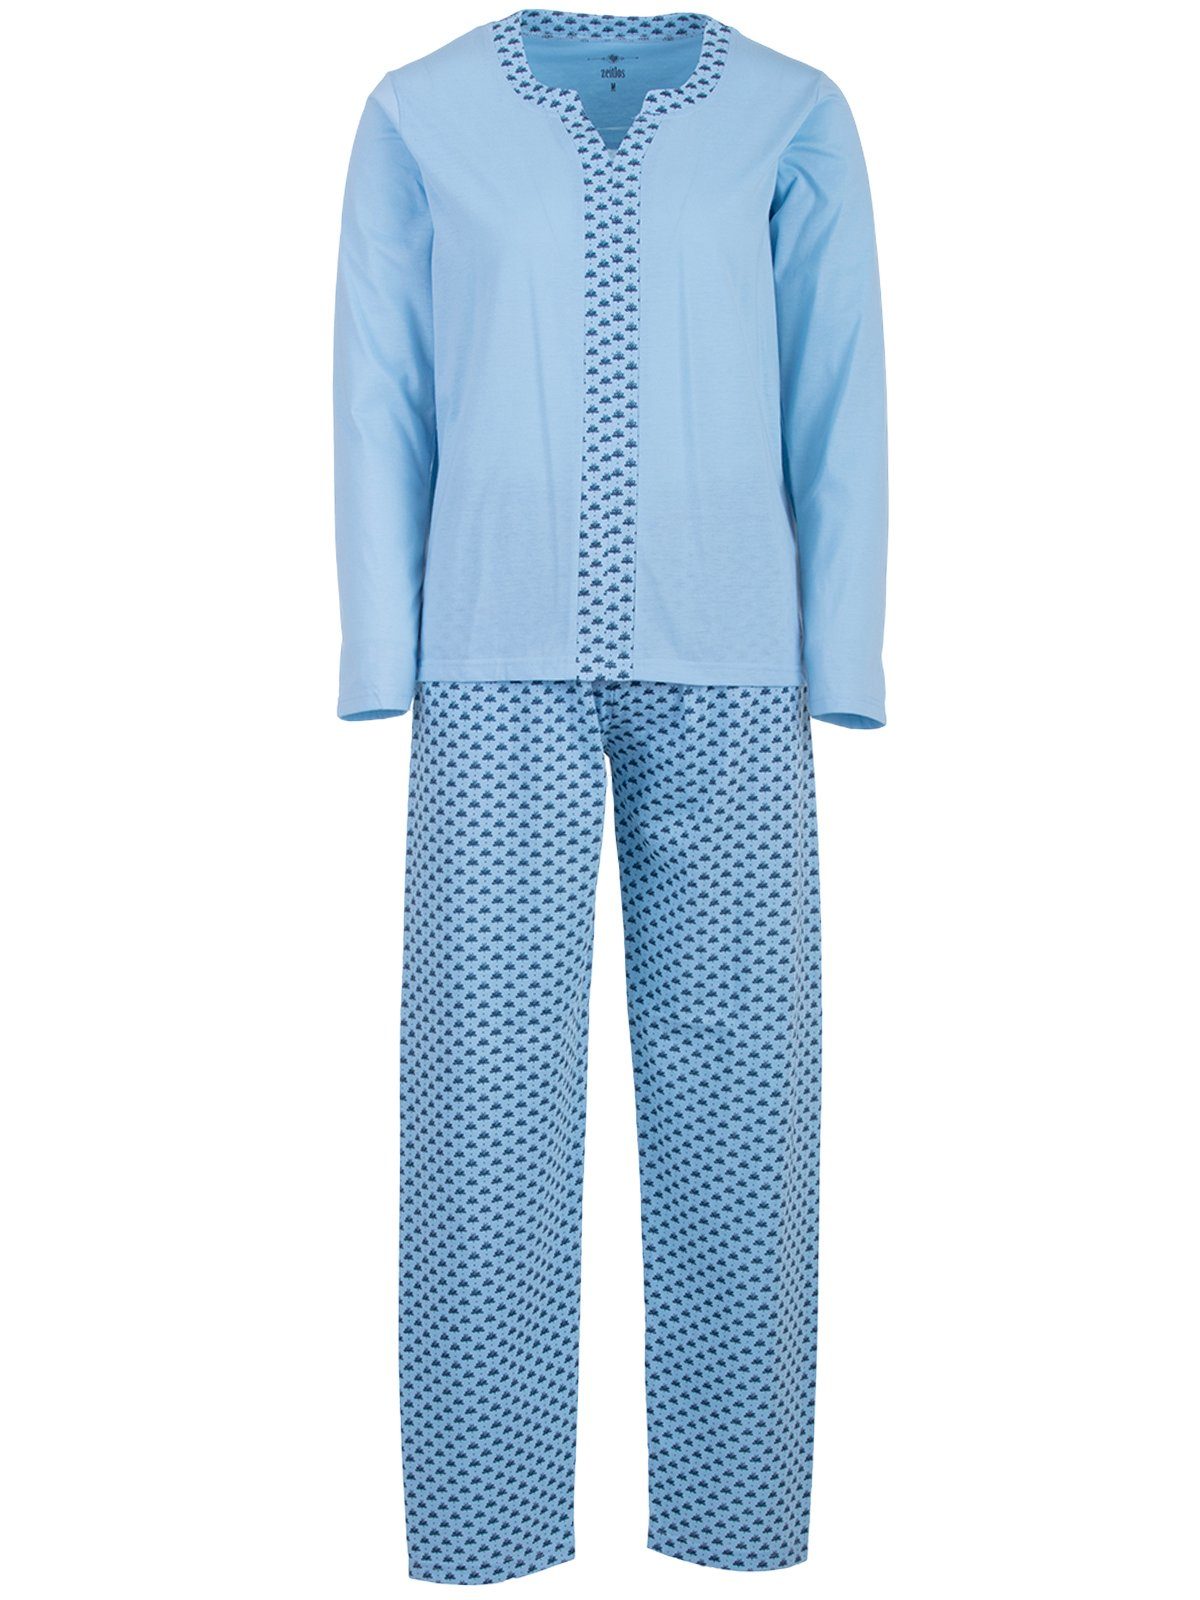 zeitlos Schlafanzug Pyjama Set Langarm - Borte Blumen blau | Pyjamas